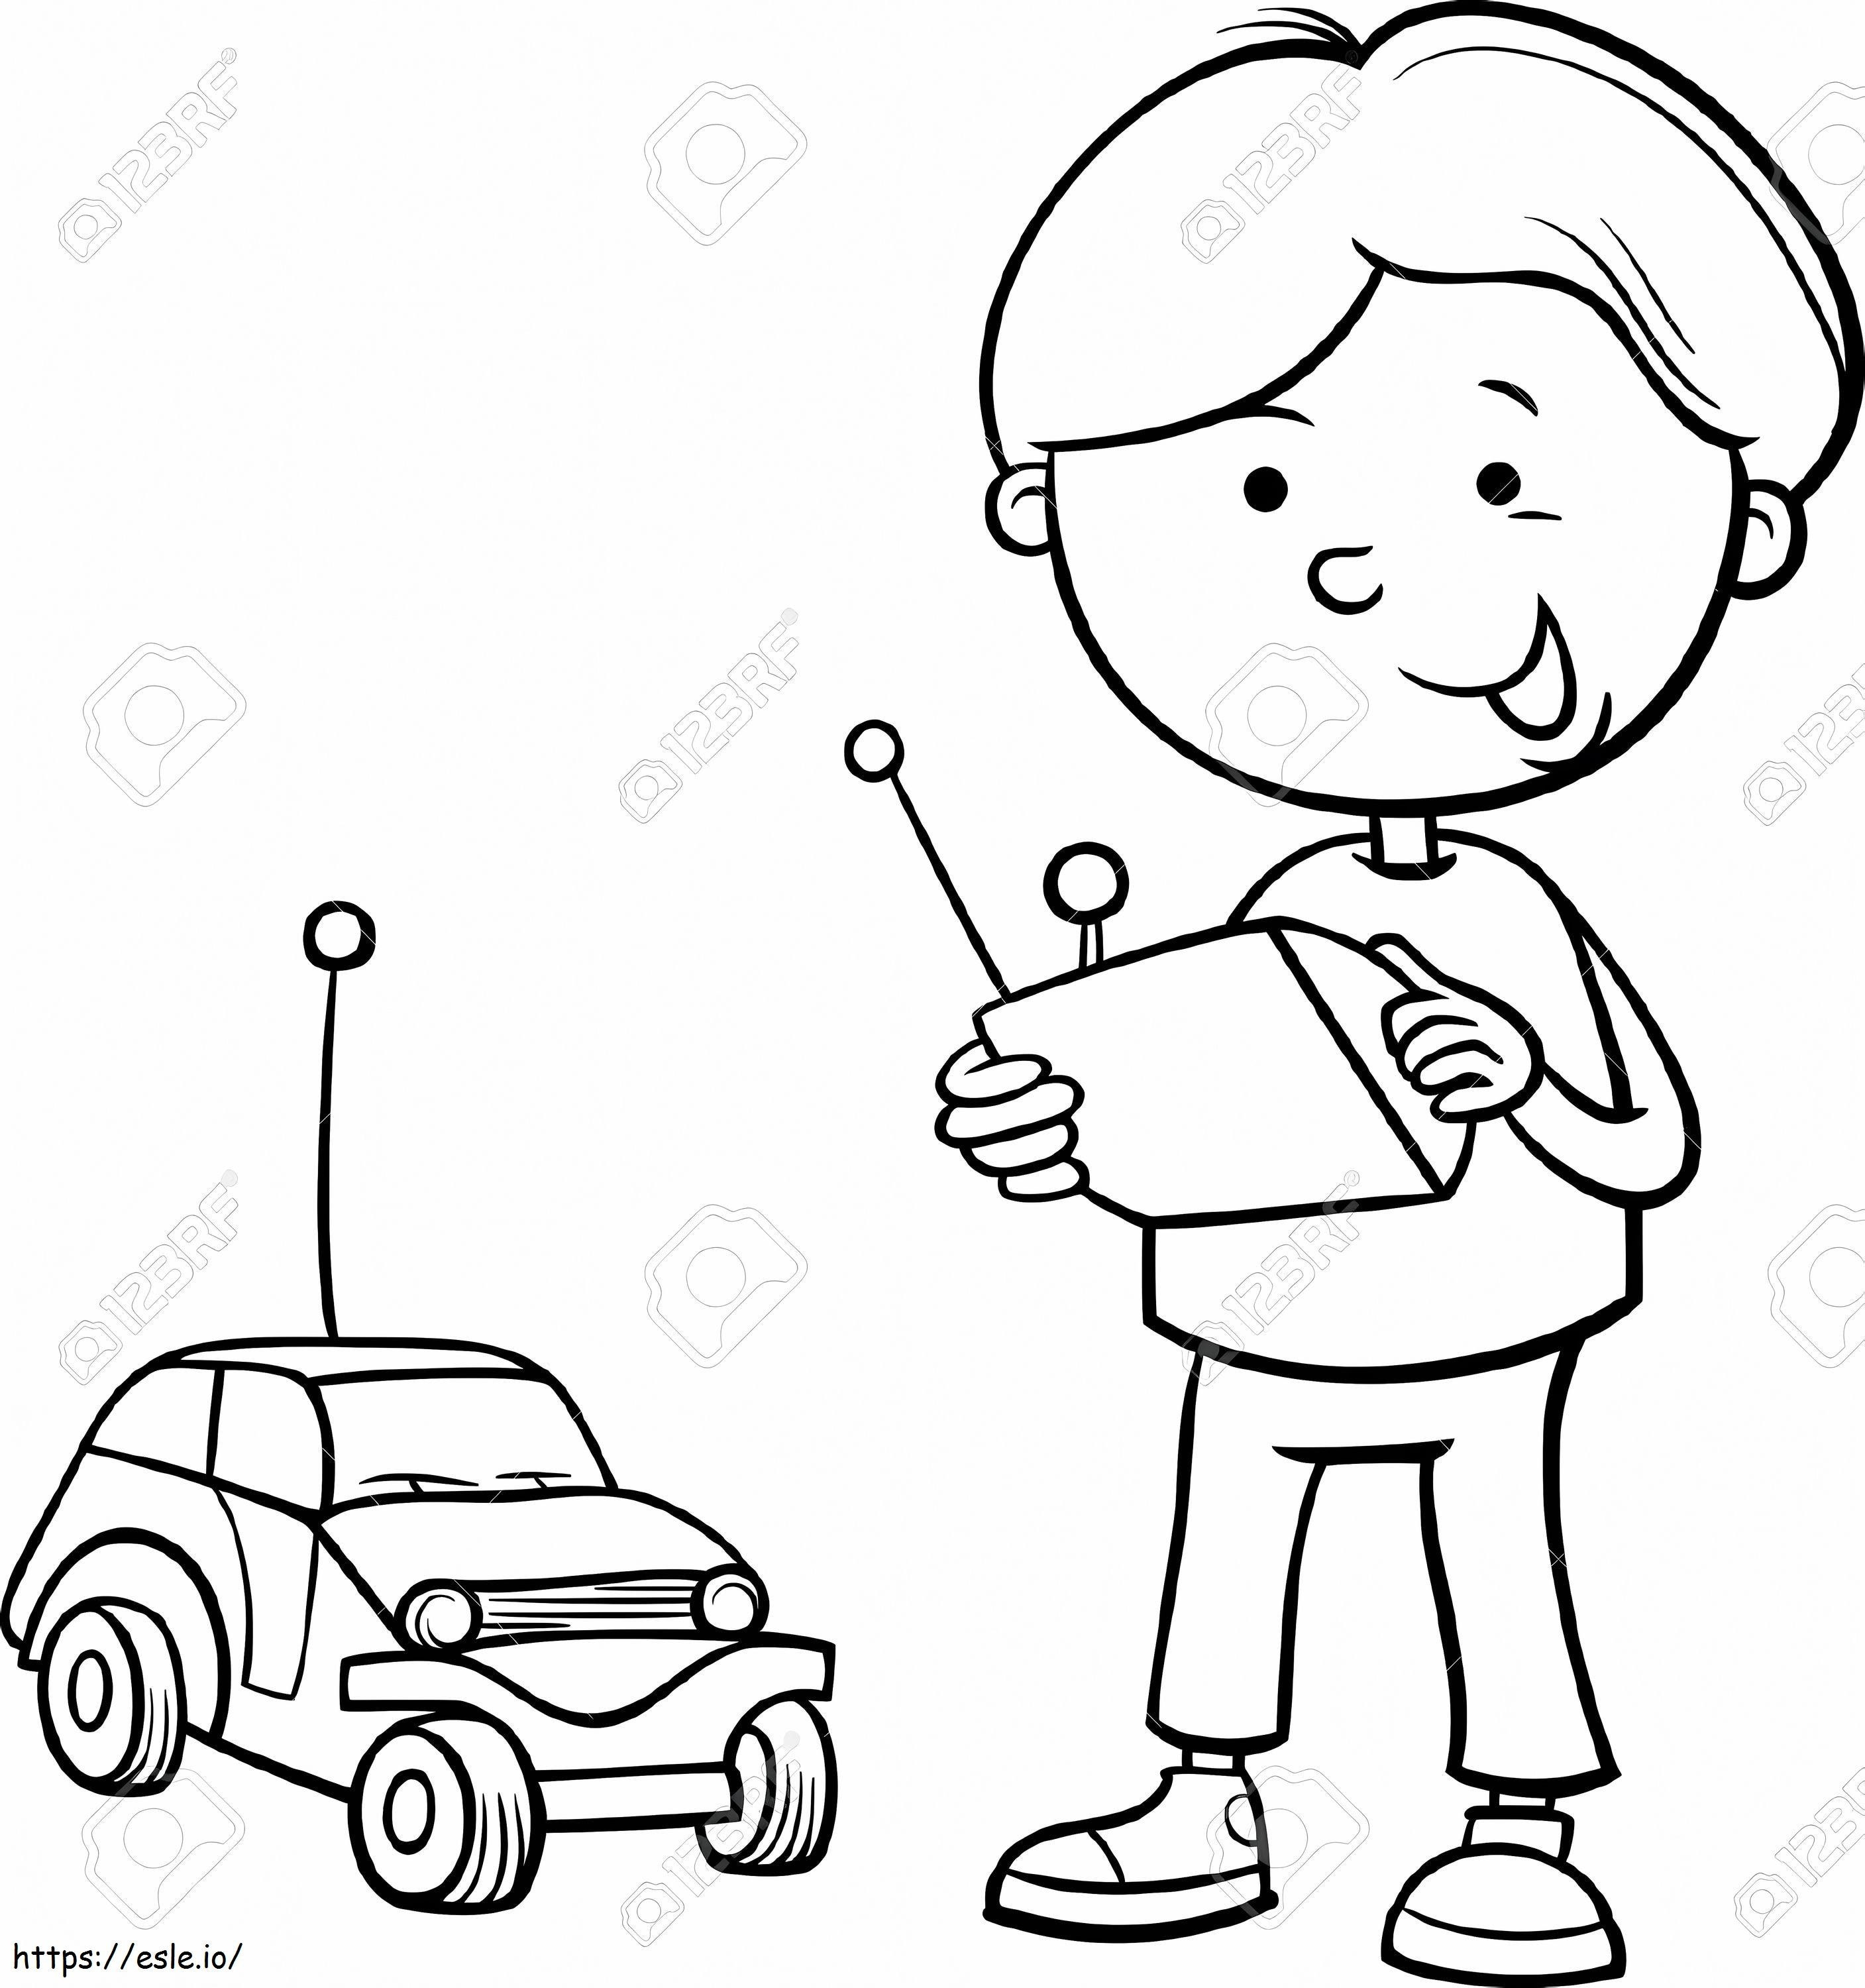  Rc Toys 2 E Car Toy Clipart Hitam Dan Putih Clipartxtras For Rc Car Information Cartoon Car At Gambar Mewarnai